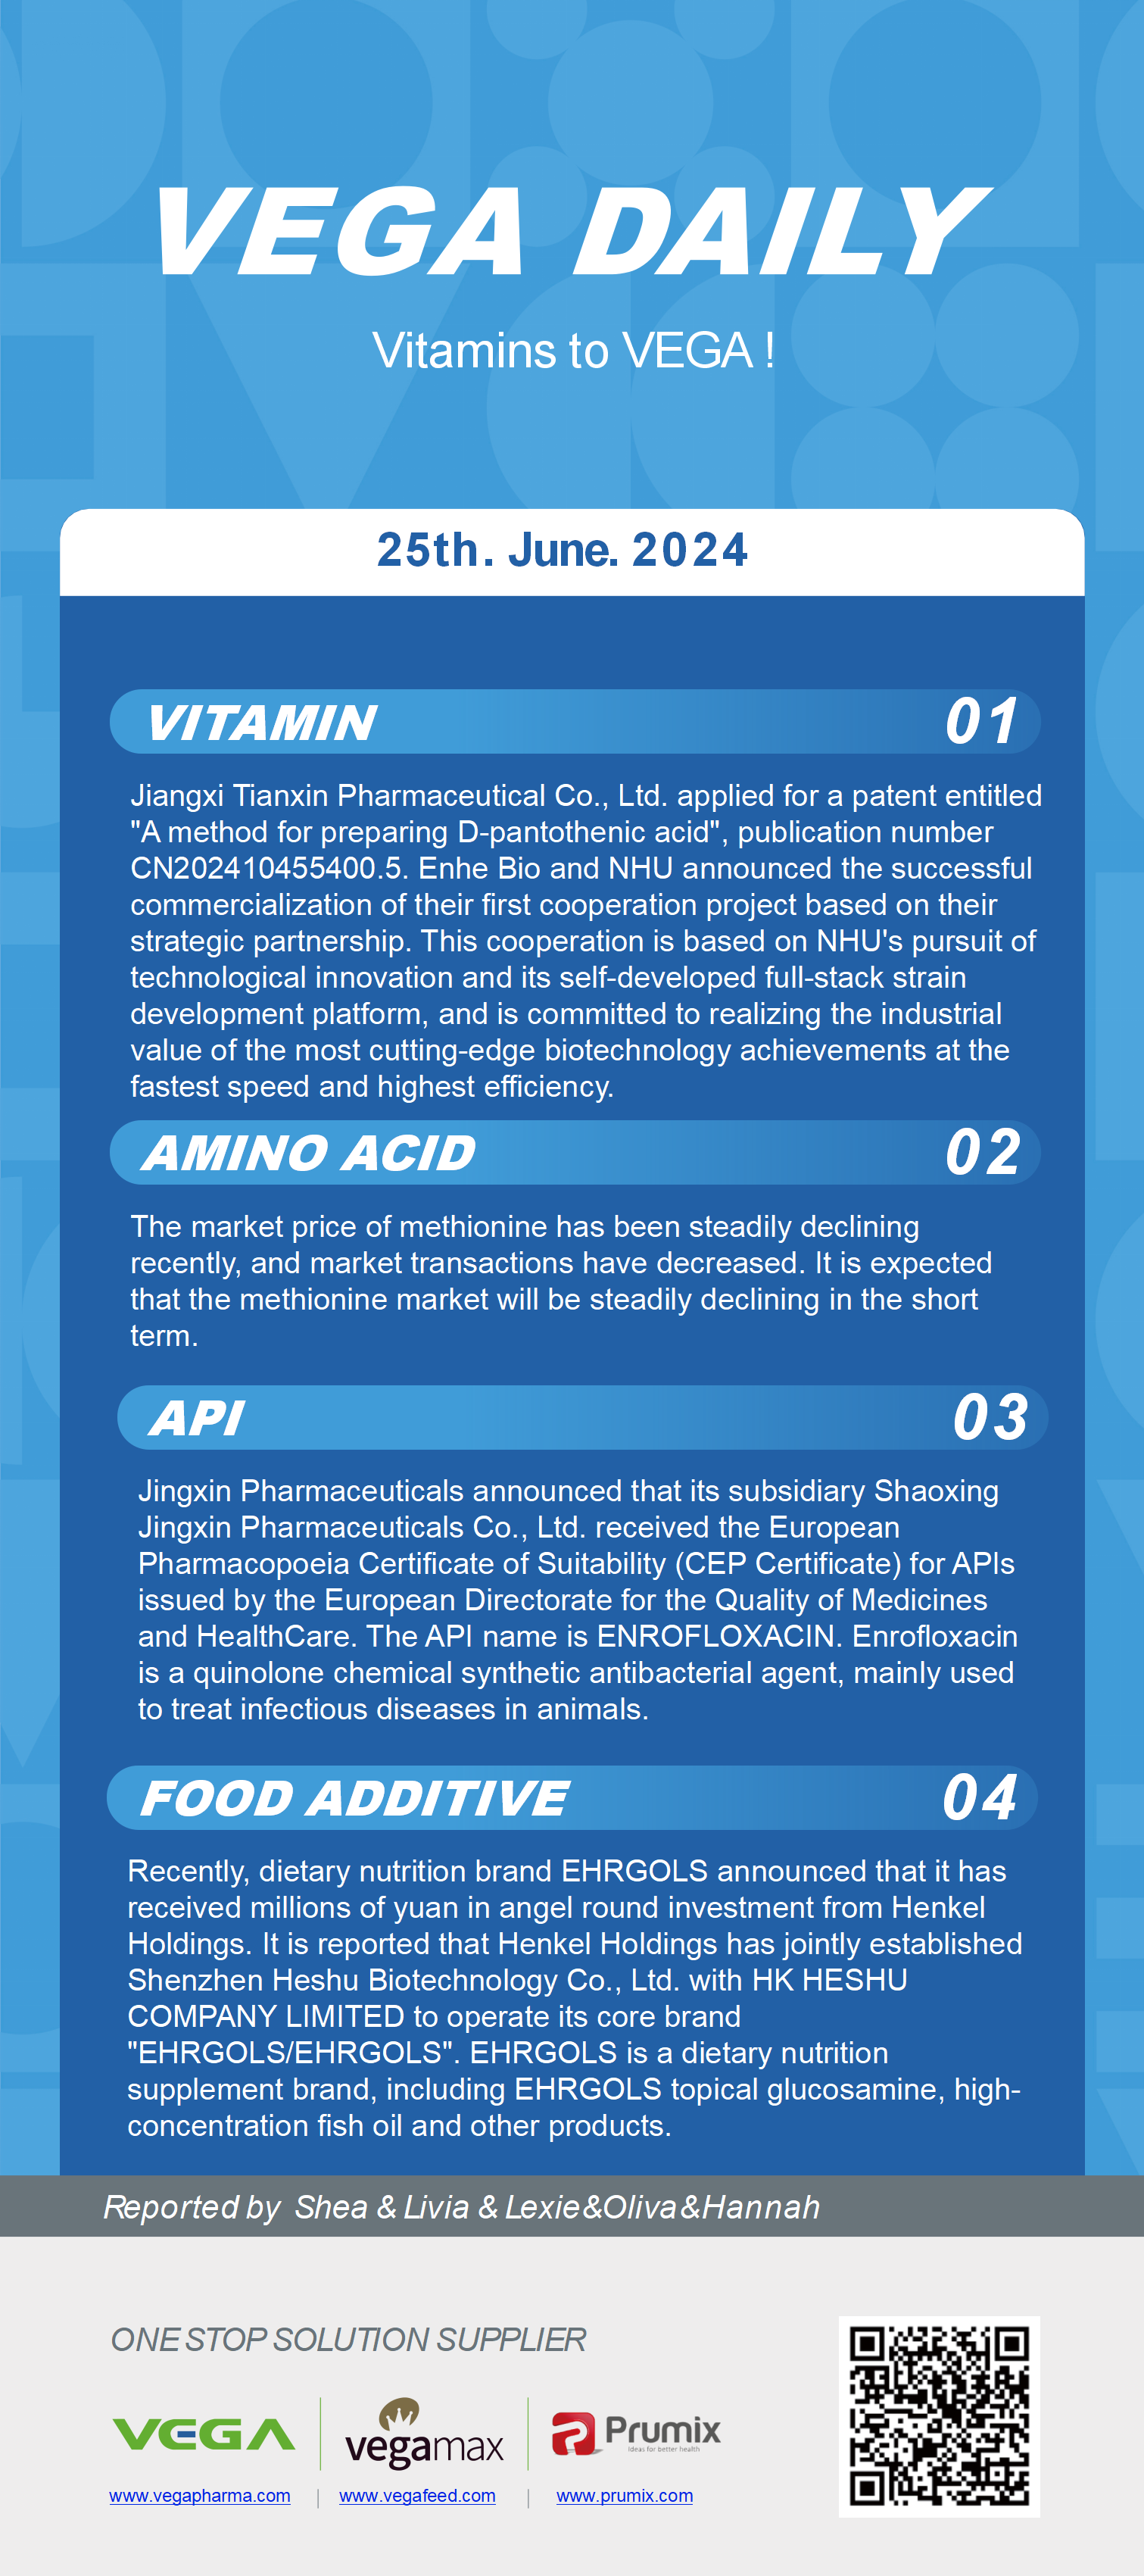 Vega Daily Dated on Jun 25th 2024 Vitamin Amino Acid APl Food Additives.png